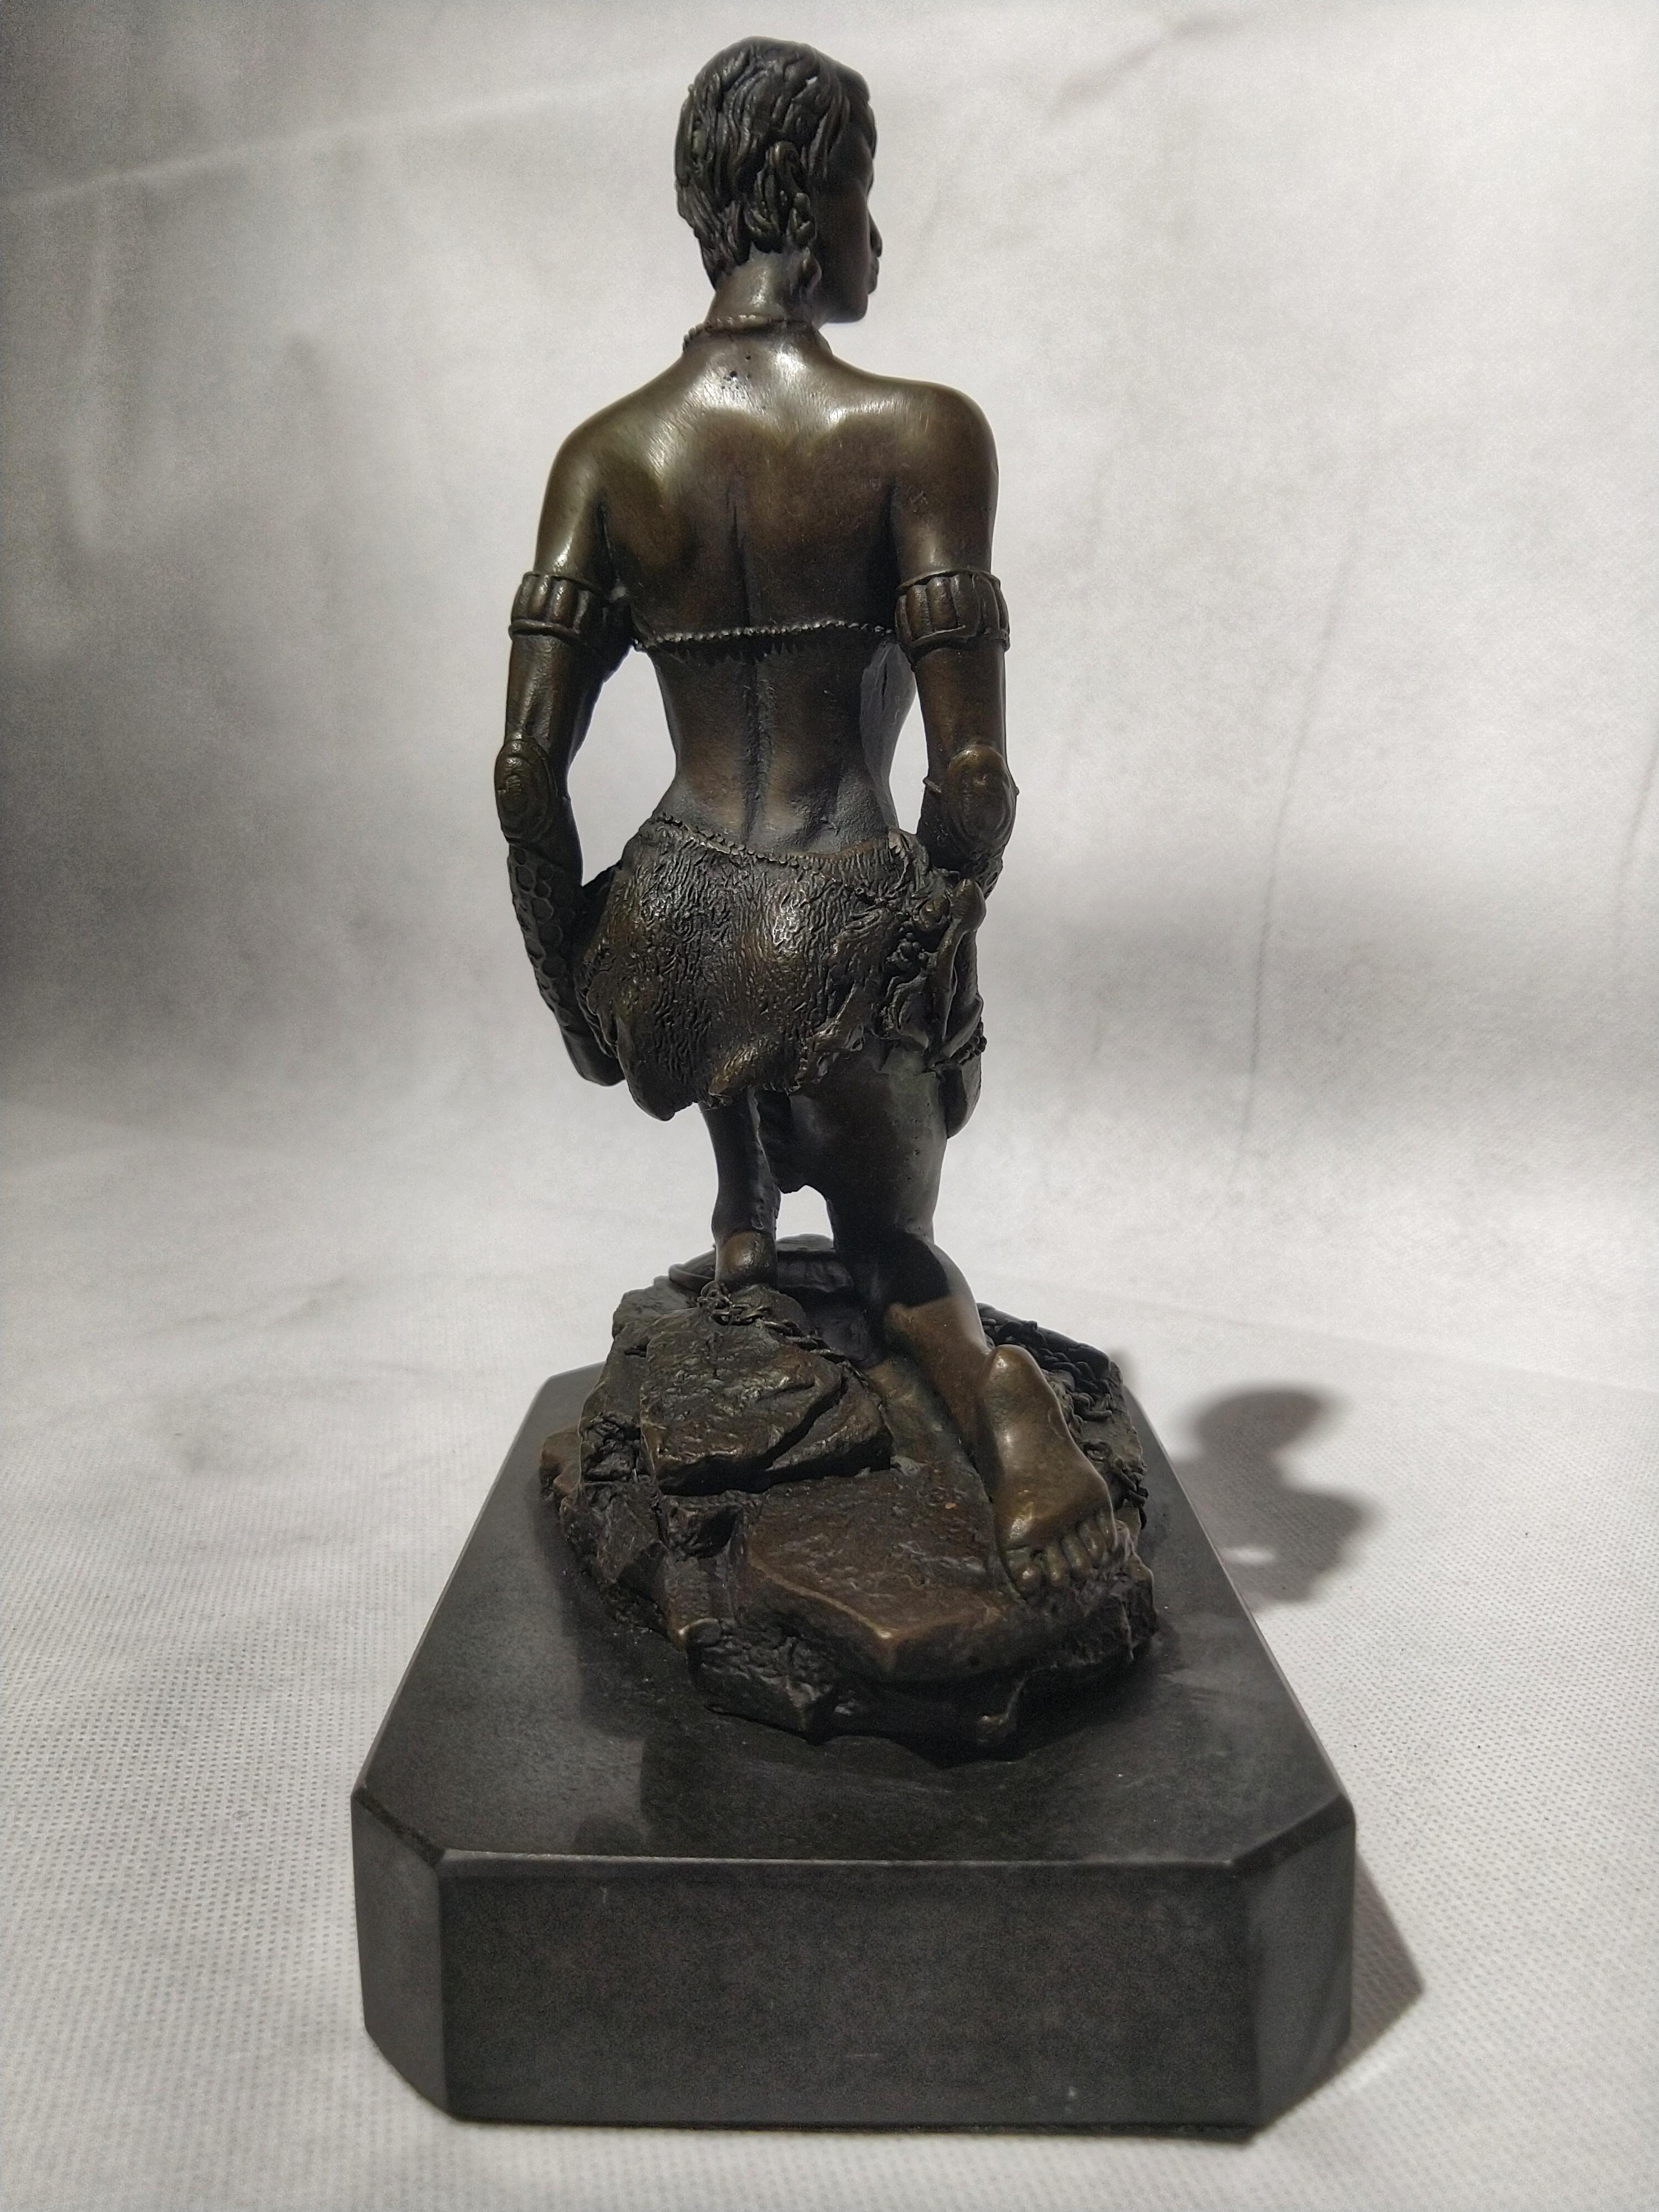 Patinated 20th Century Art Deco Sculpture Figure Plum Bronze Amazon Warrior